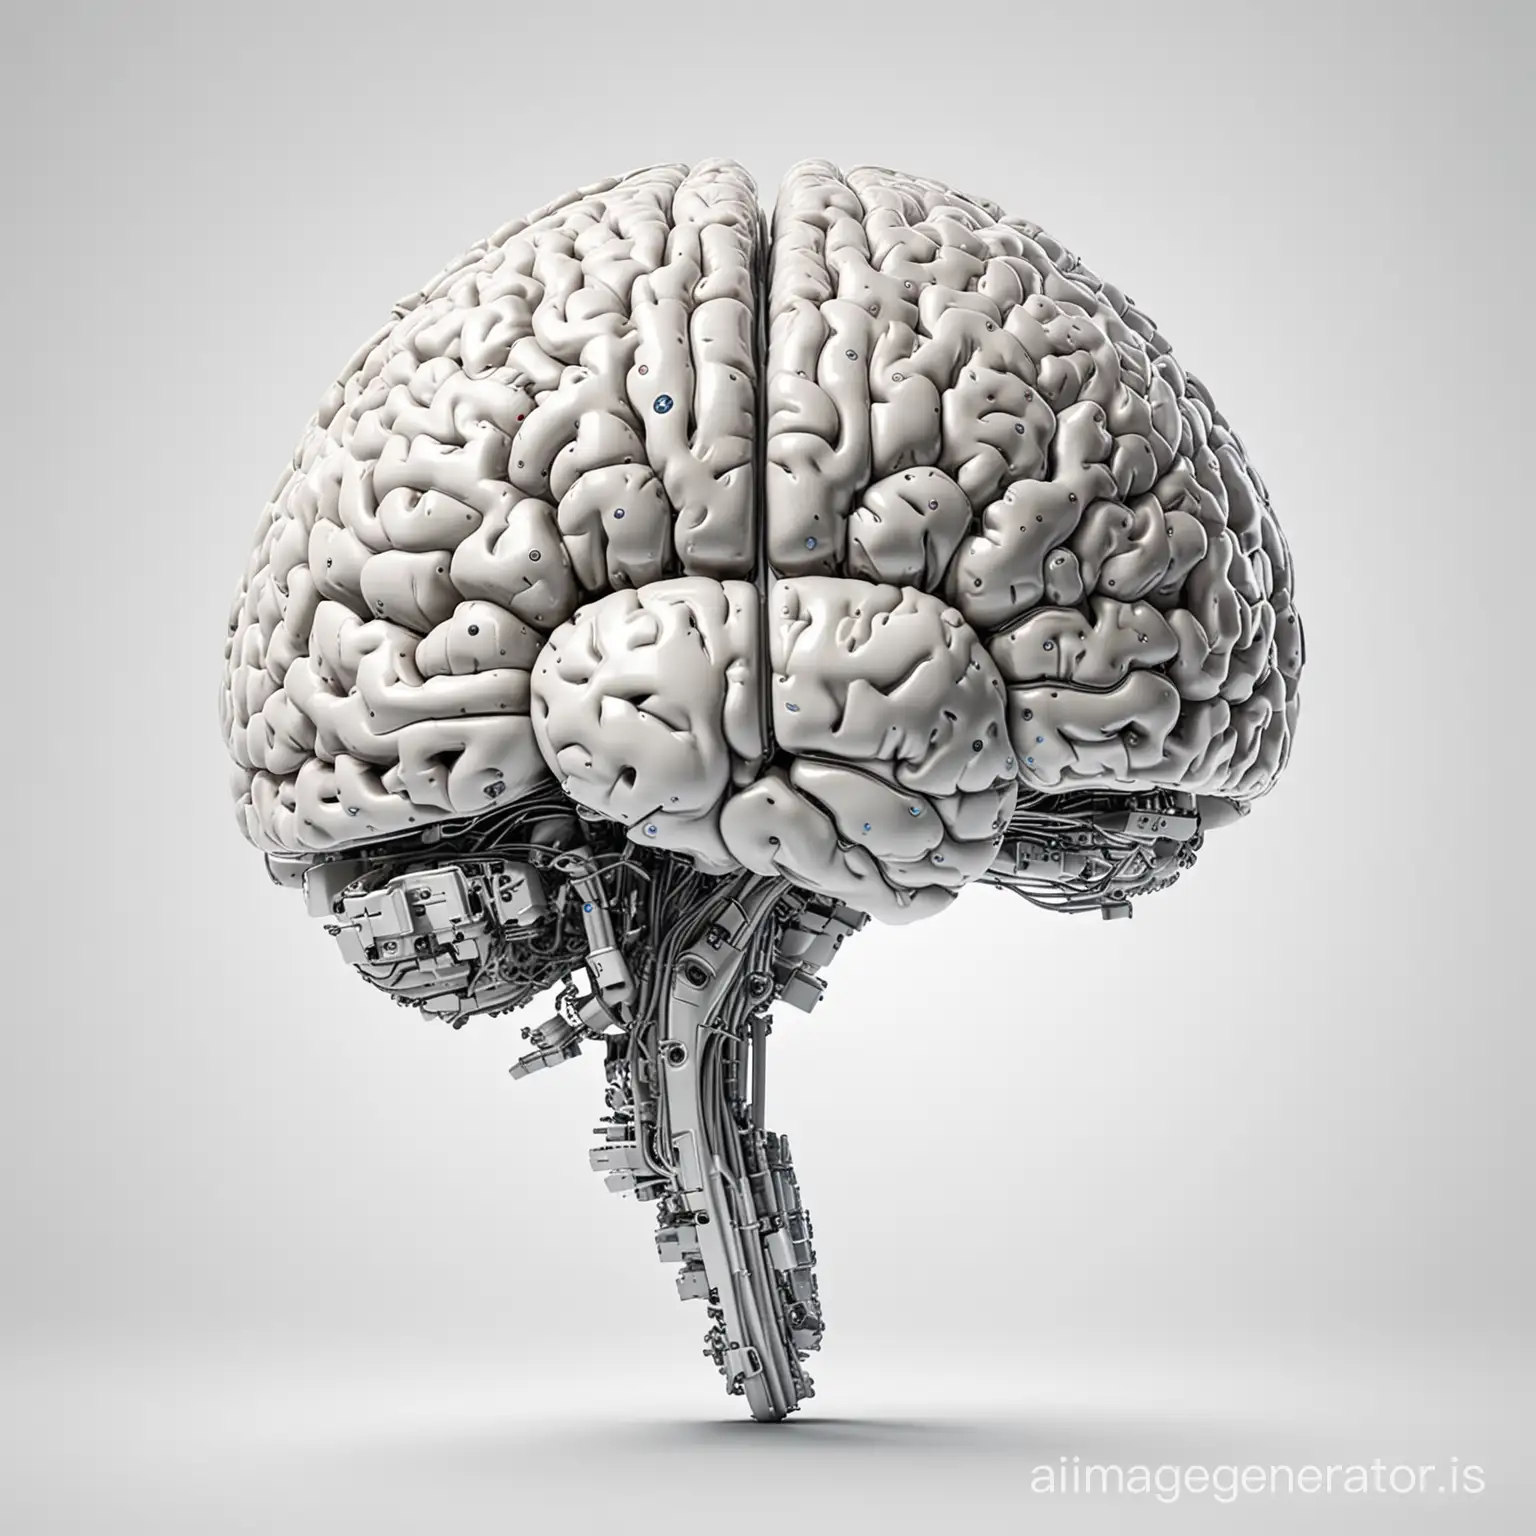 Artificial-Intelligence-The-Human-Brain-Illuminated-on-White-Background